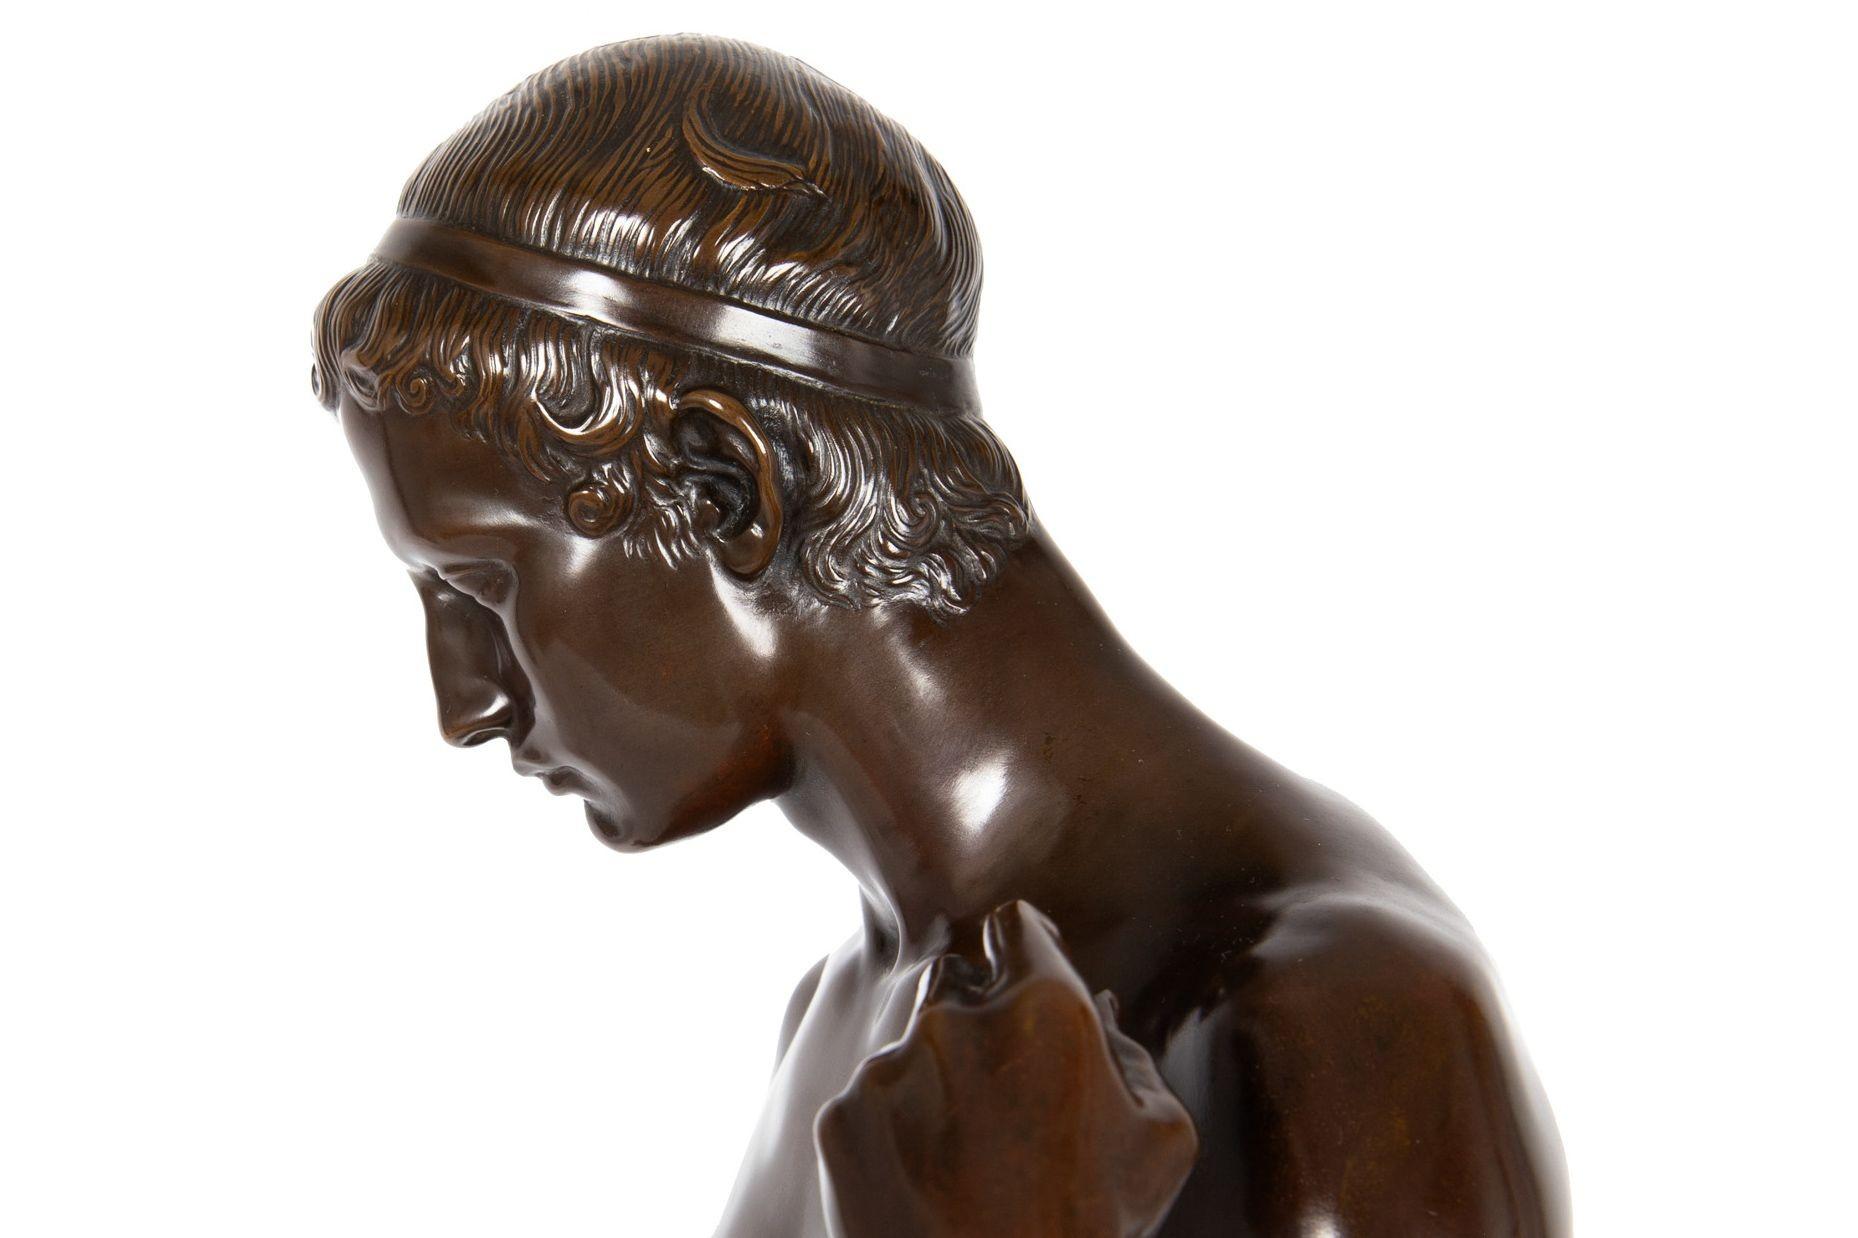 Rare Antique Bronze Sculpture of “Adam” (1911) by Charles Samuel 8